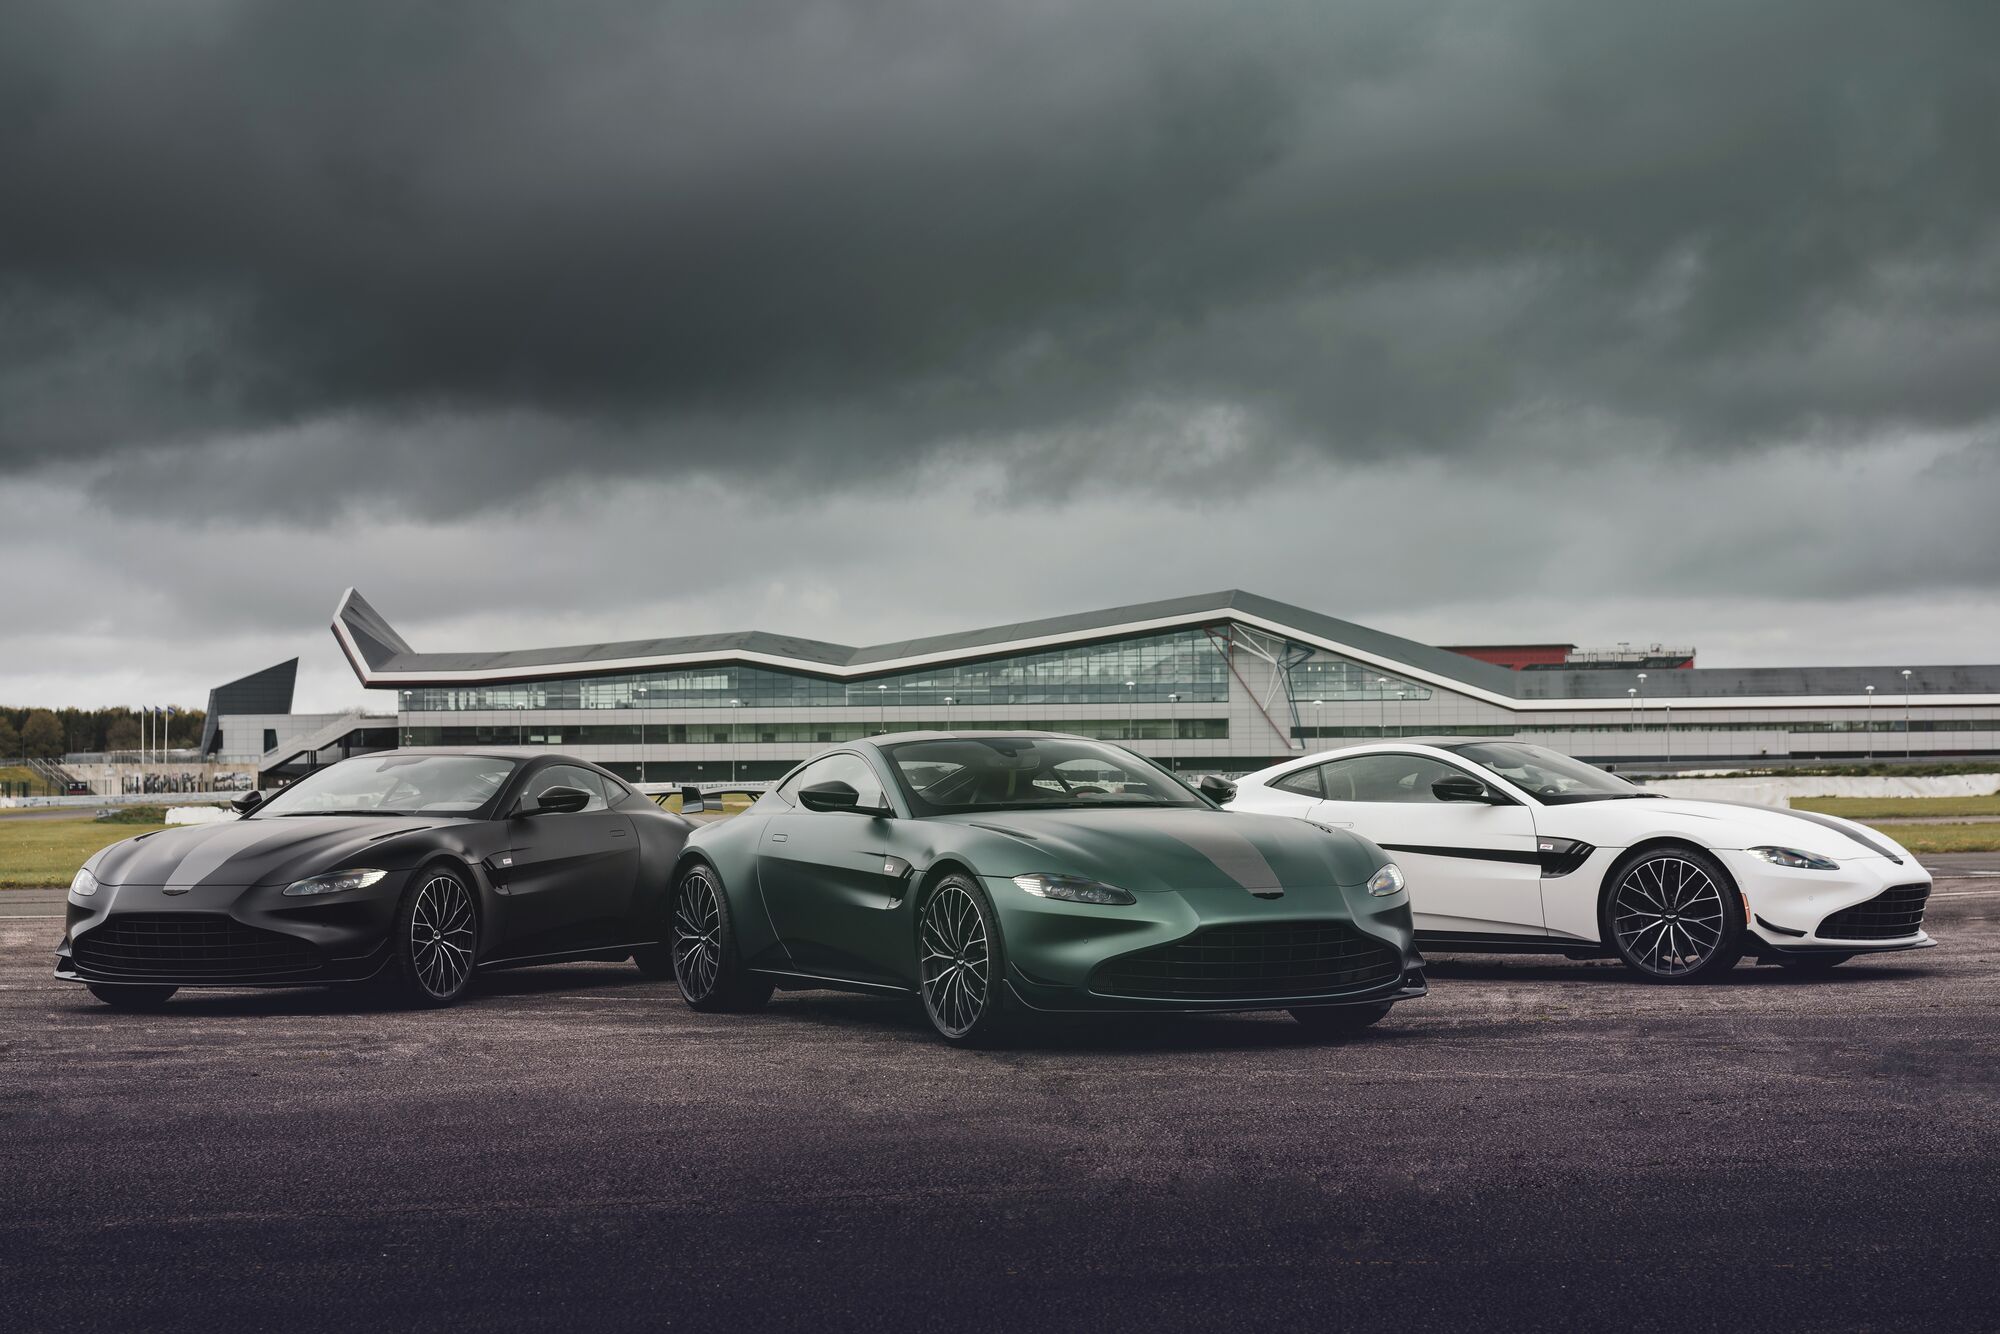 Aston Martin Models